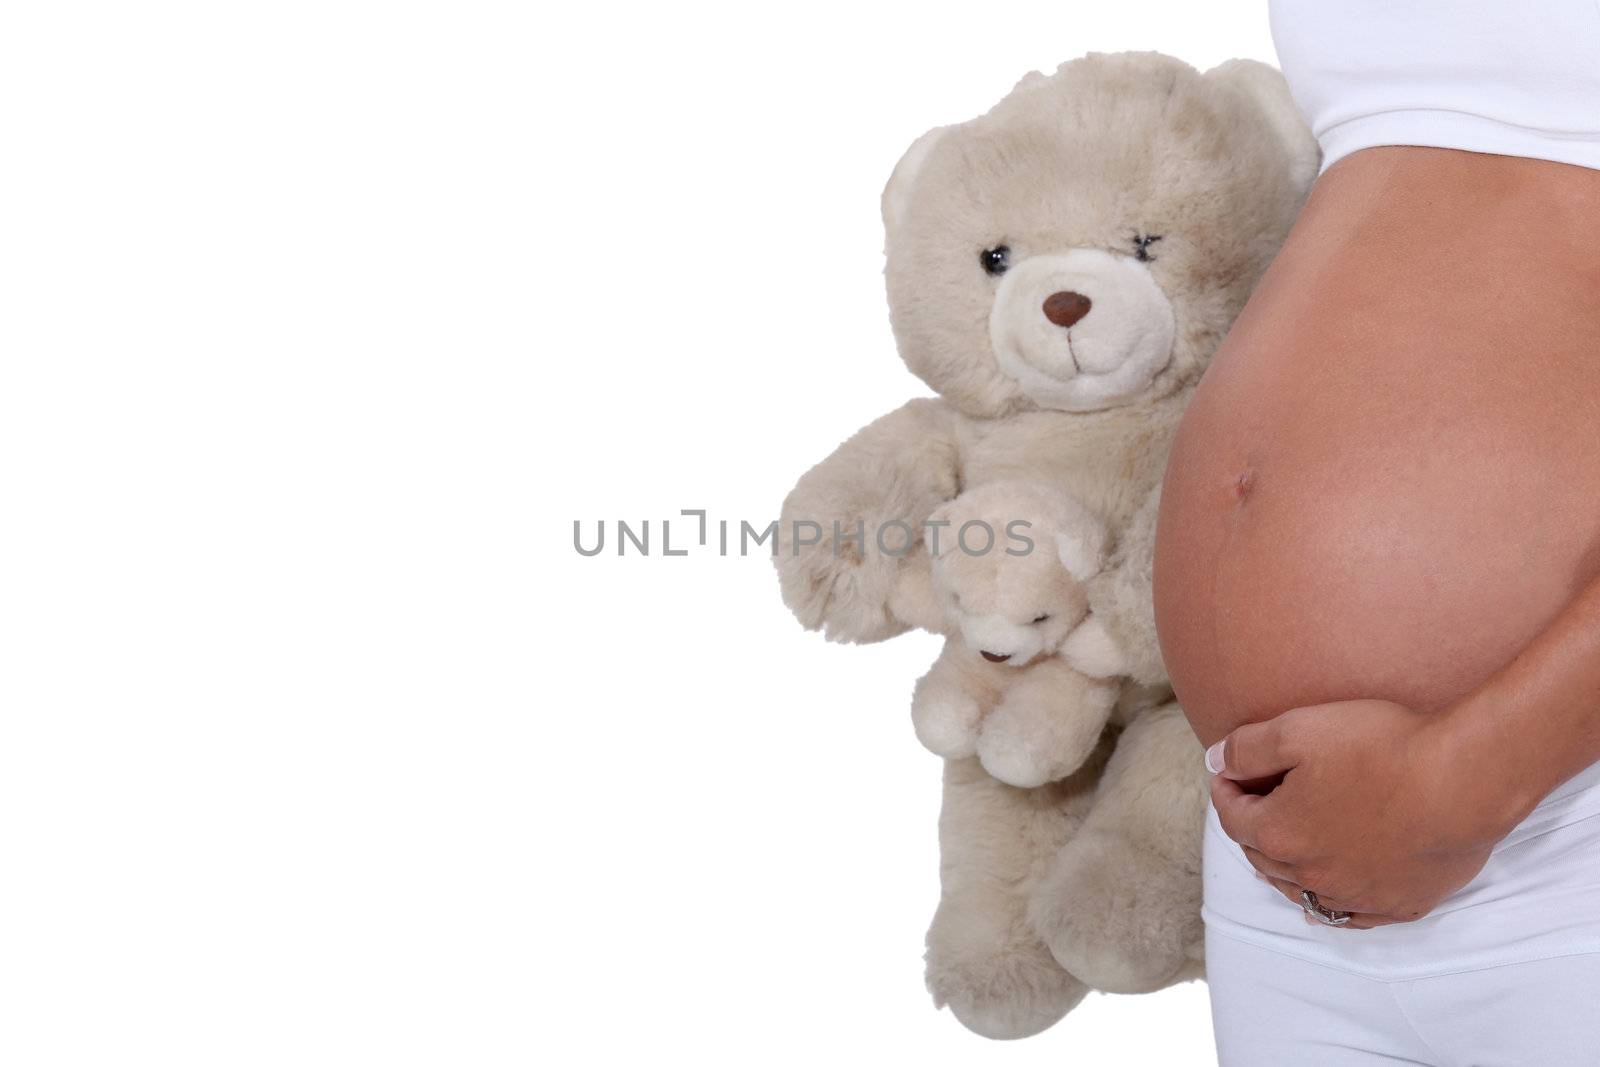 A pregnant woman holding a teddy bear.